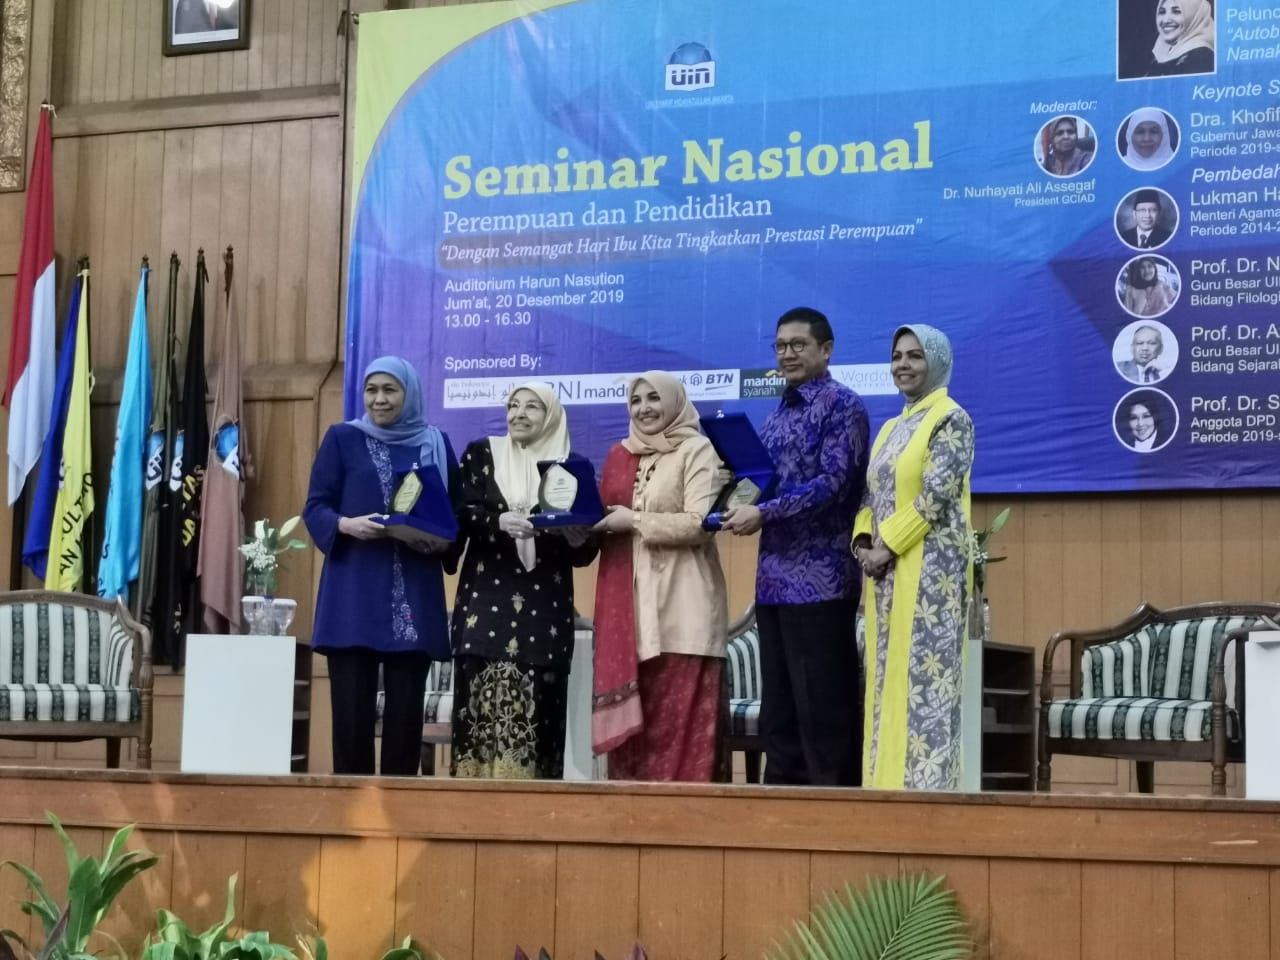 Penghargaan diberikan Rektor UIN Syarif Hidayatullah Prof Dr Amany Lubis, MA kepada LHS pada Seminar Nasional Perempuan dan Pendidikan di Kampus UIN Jakarta. (Foto: Kemenag)